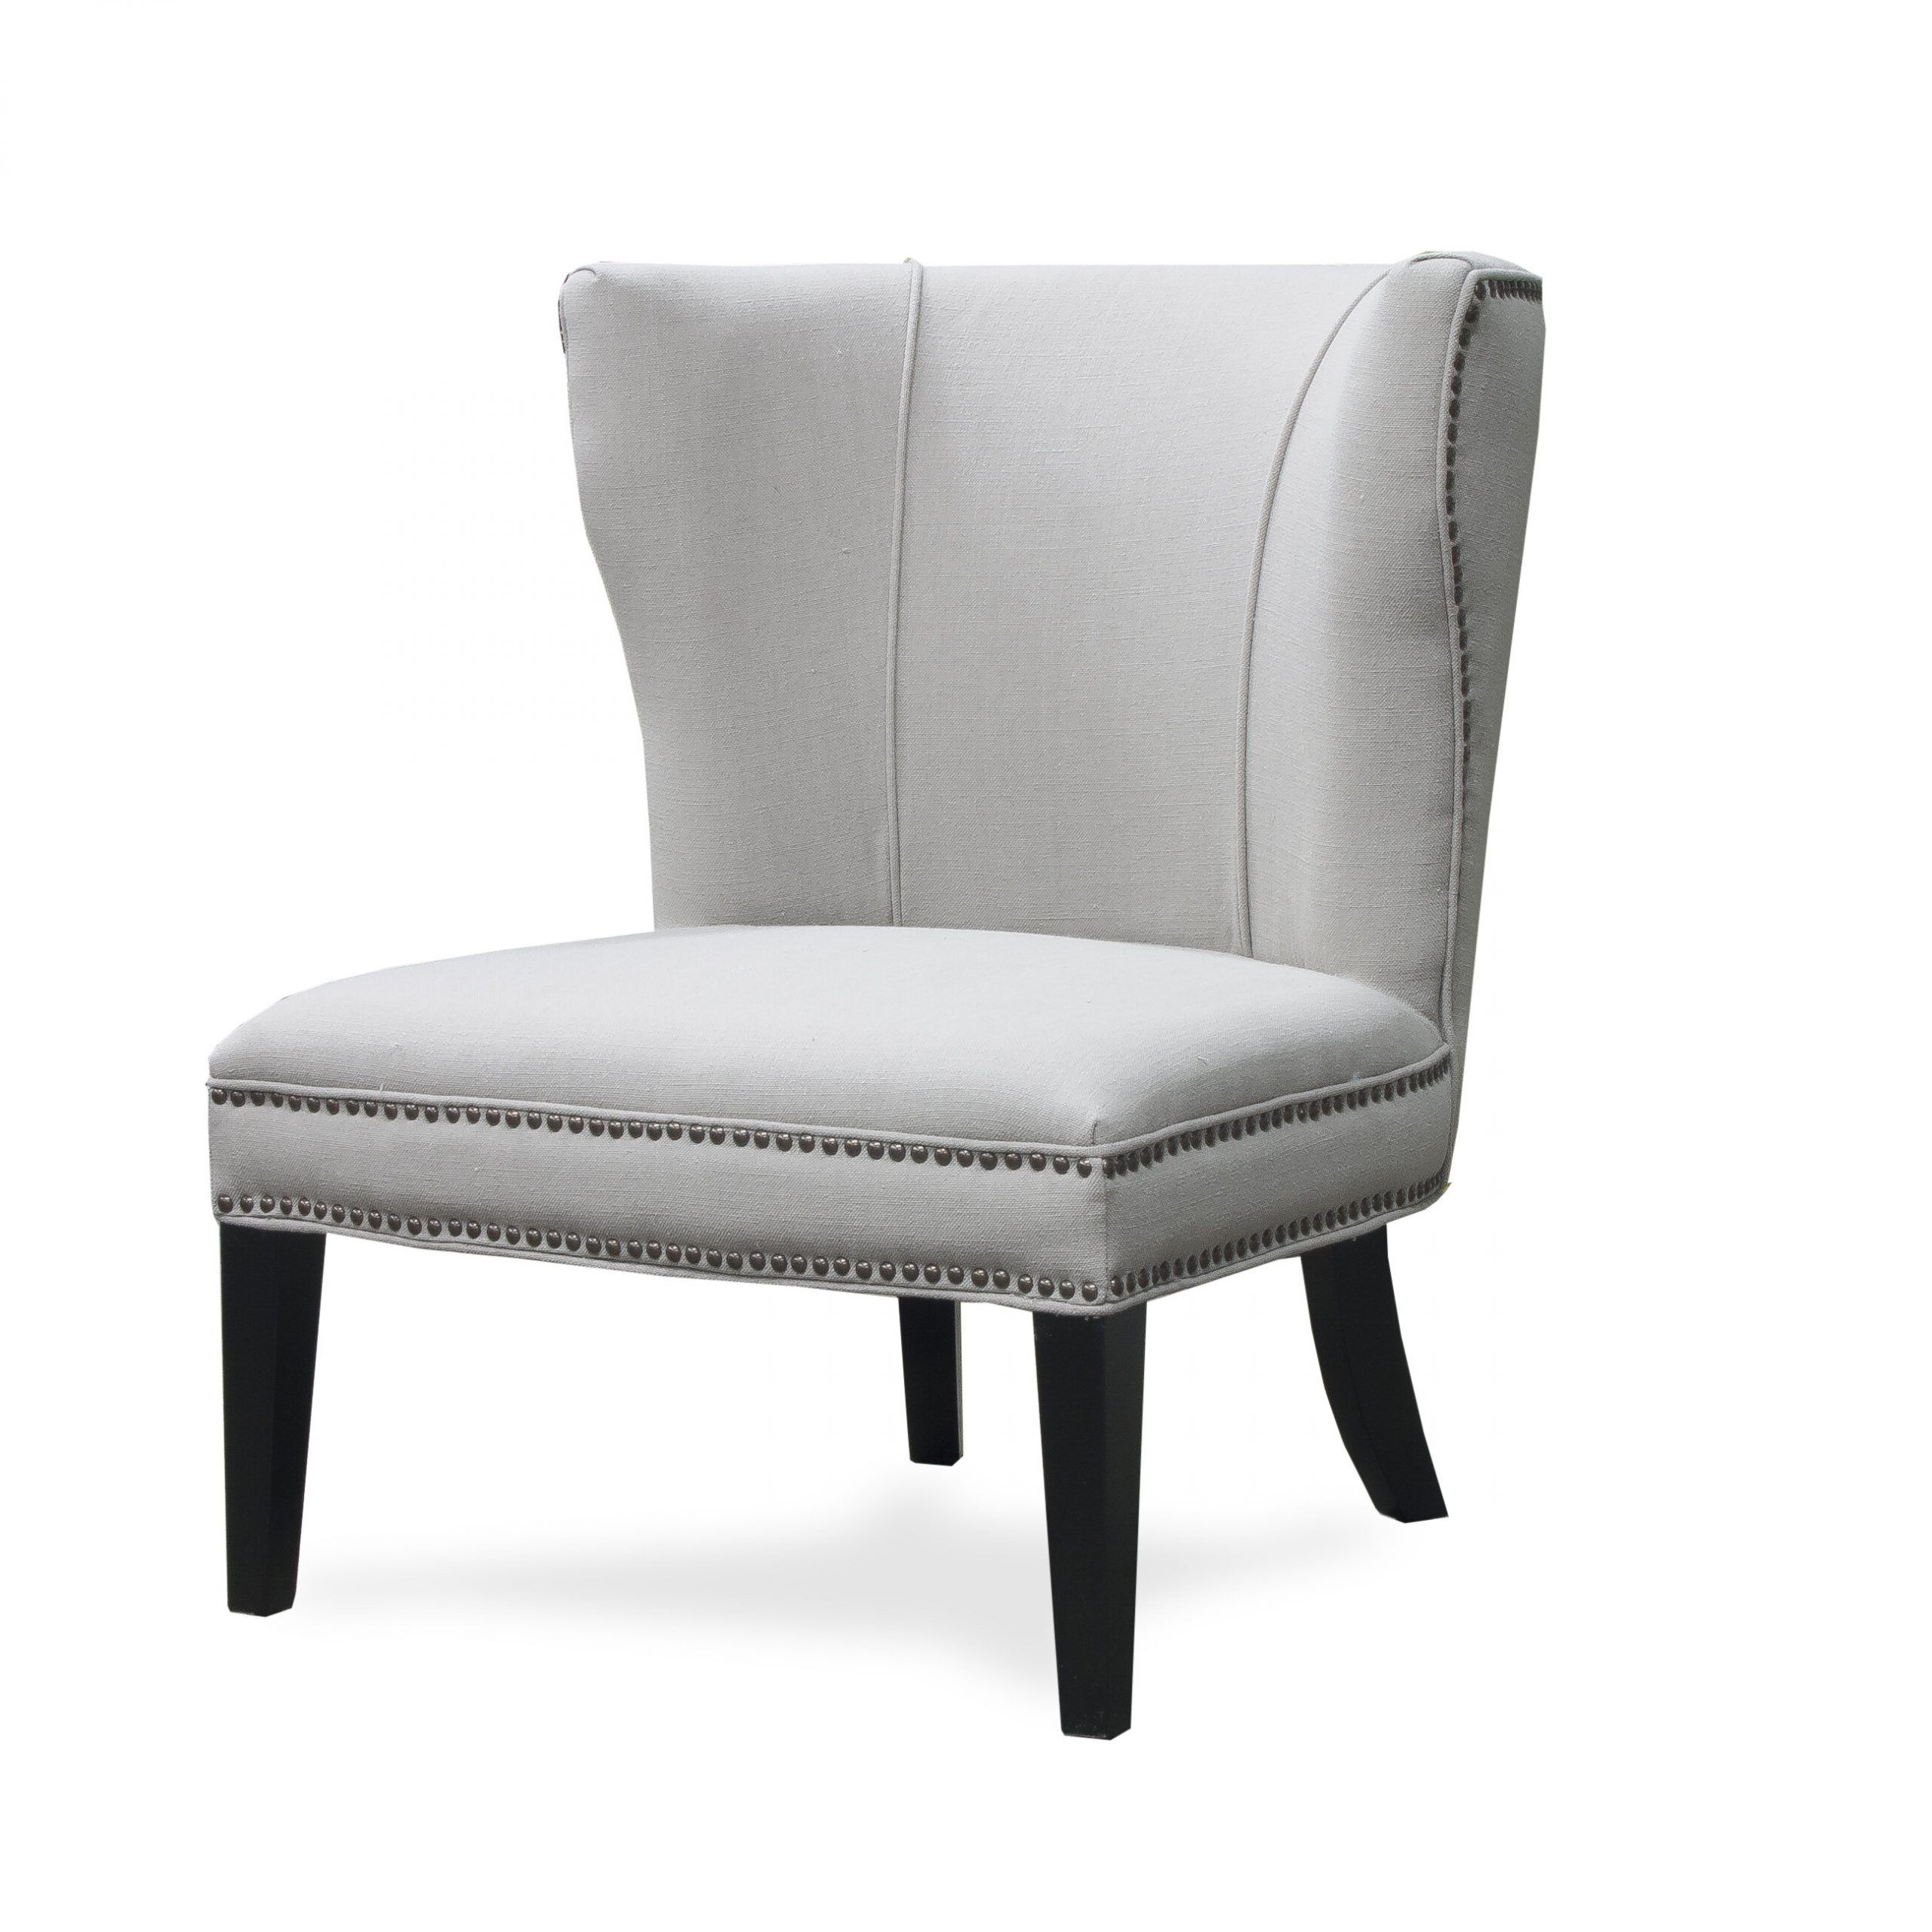 Bucci Slipper Chairs Regarding Best And Newest Carolina Slipper Chair (View 20 of 20)